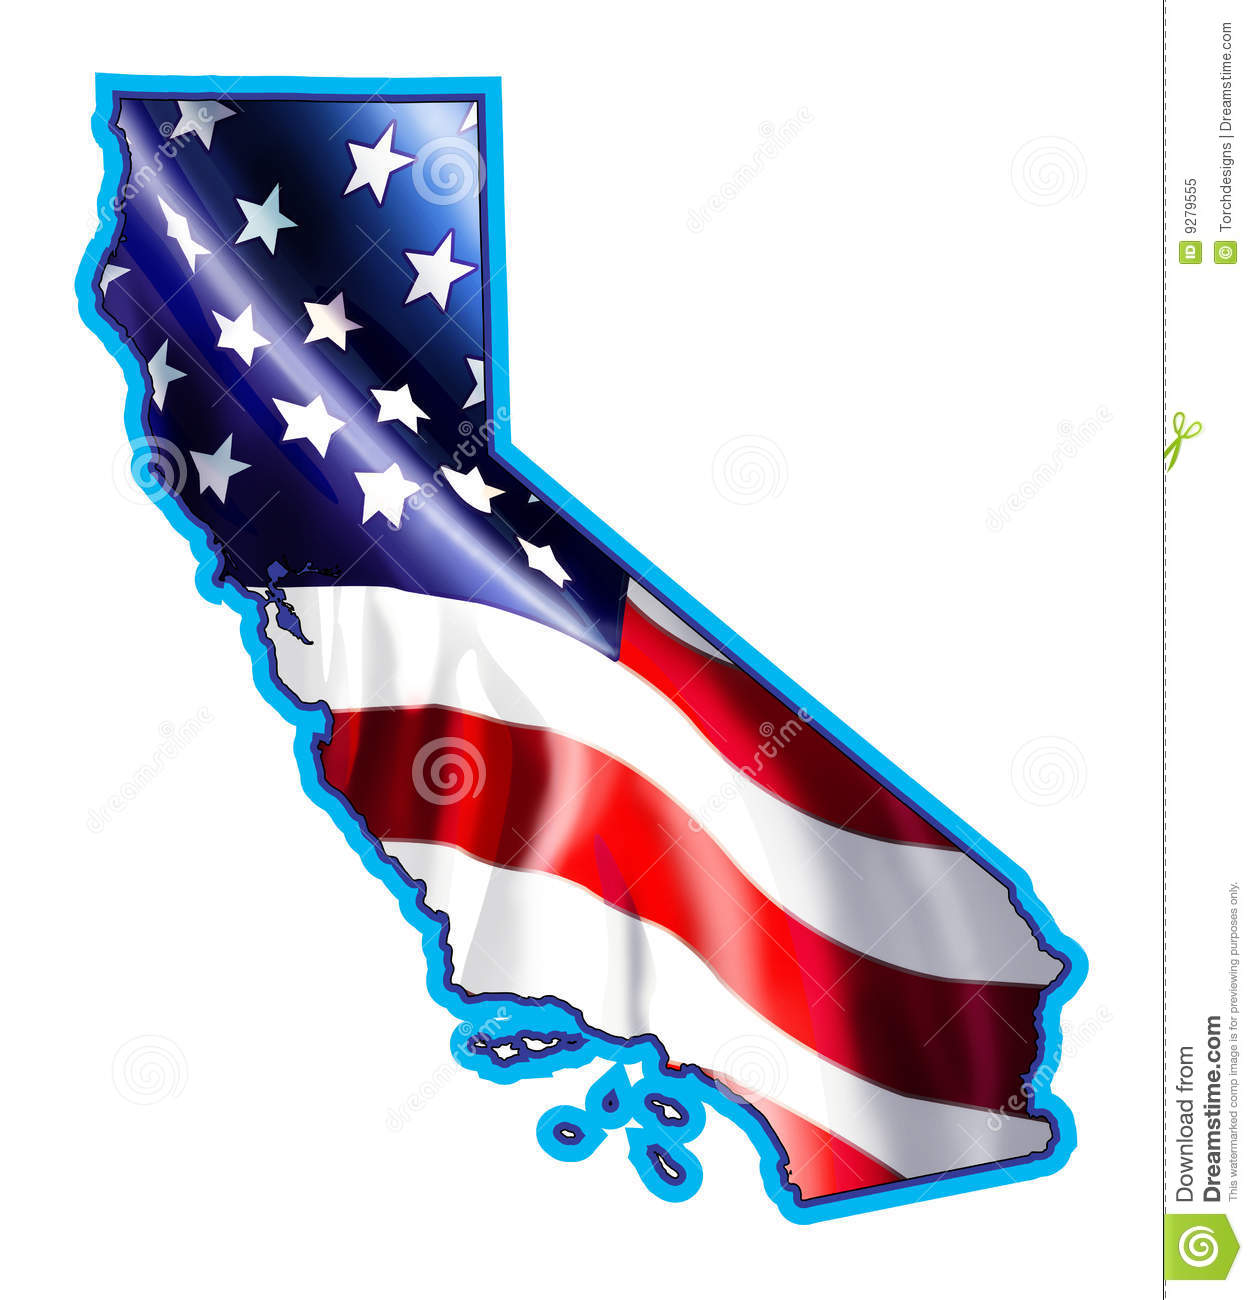 California Map With Flag Illustration Royalty Free Stock Photo   Image